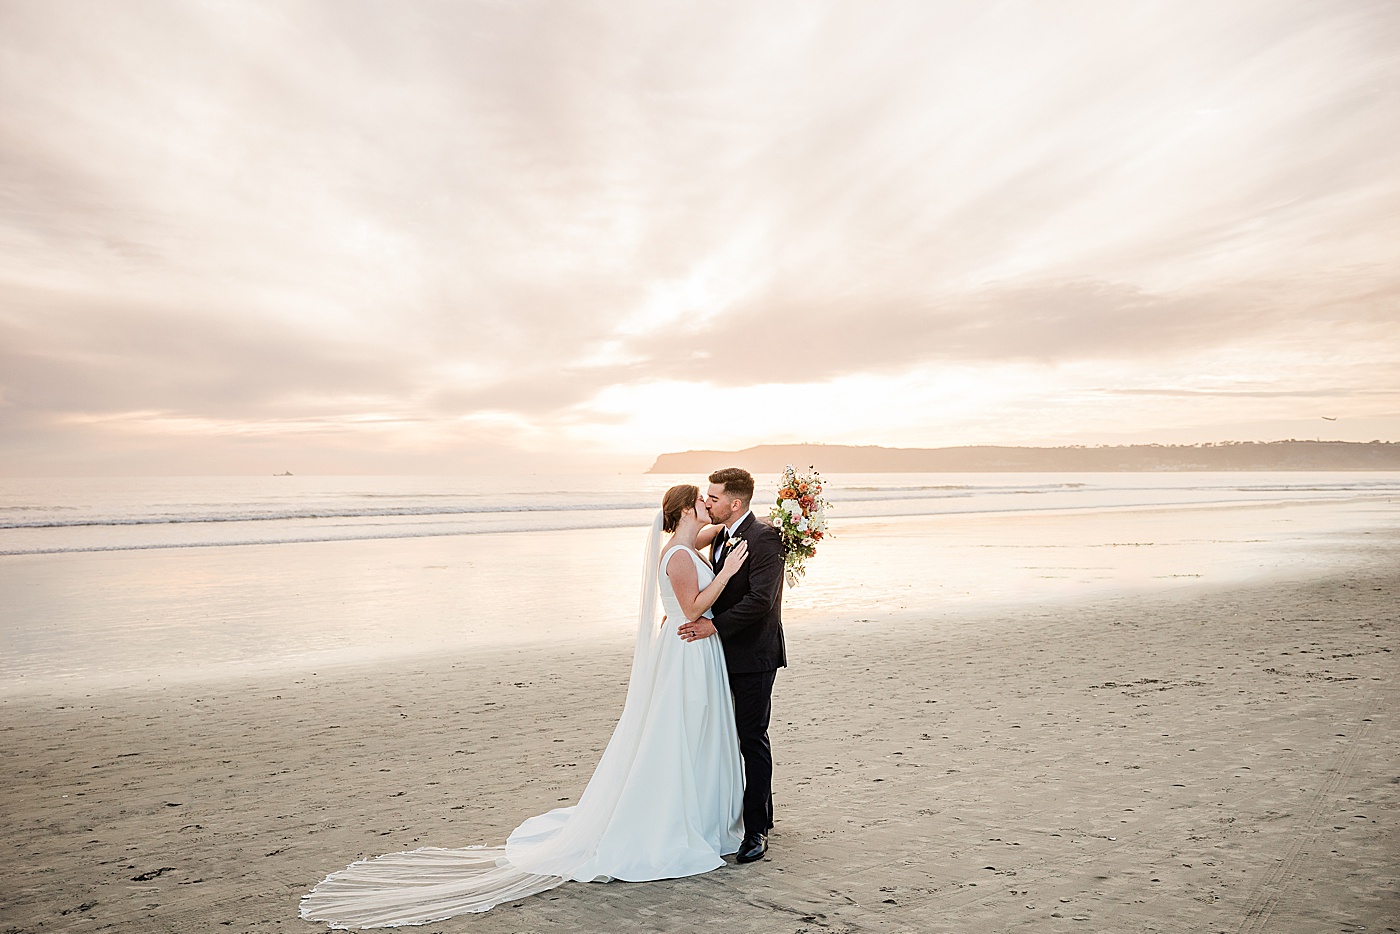 Coronado beach elopement at sunset. Bride and groom embracing at the beach.